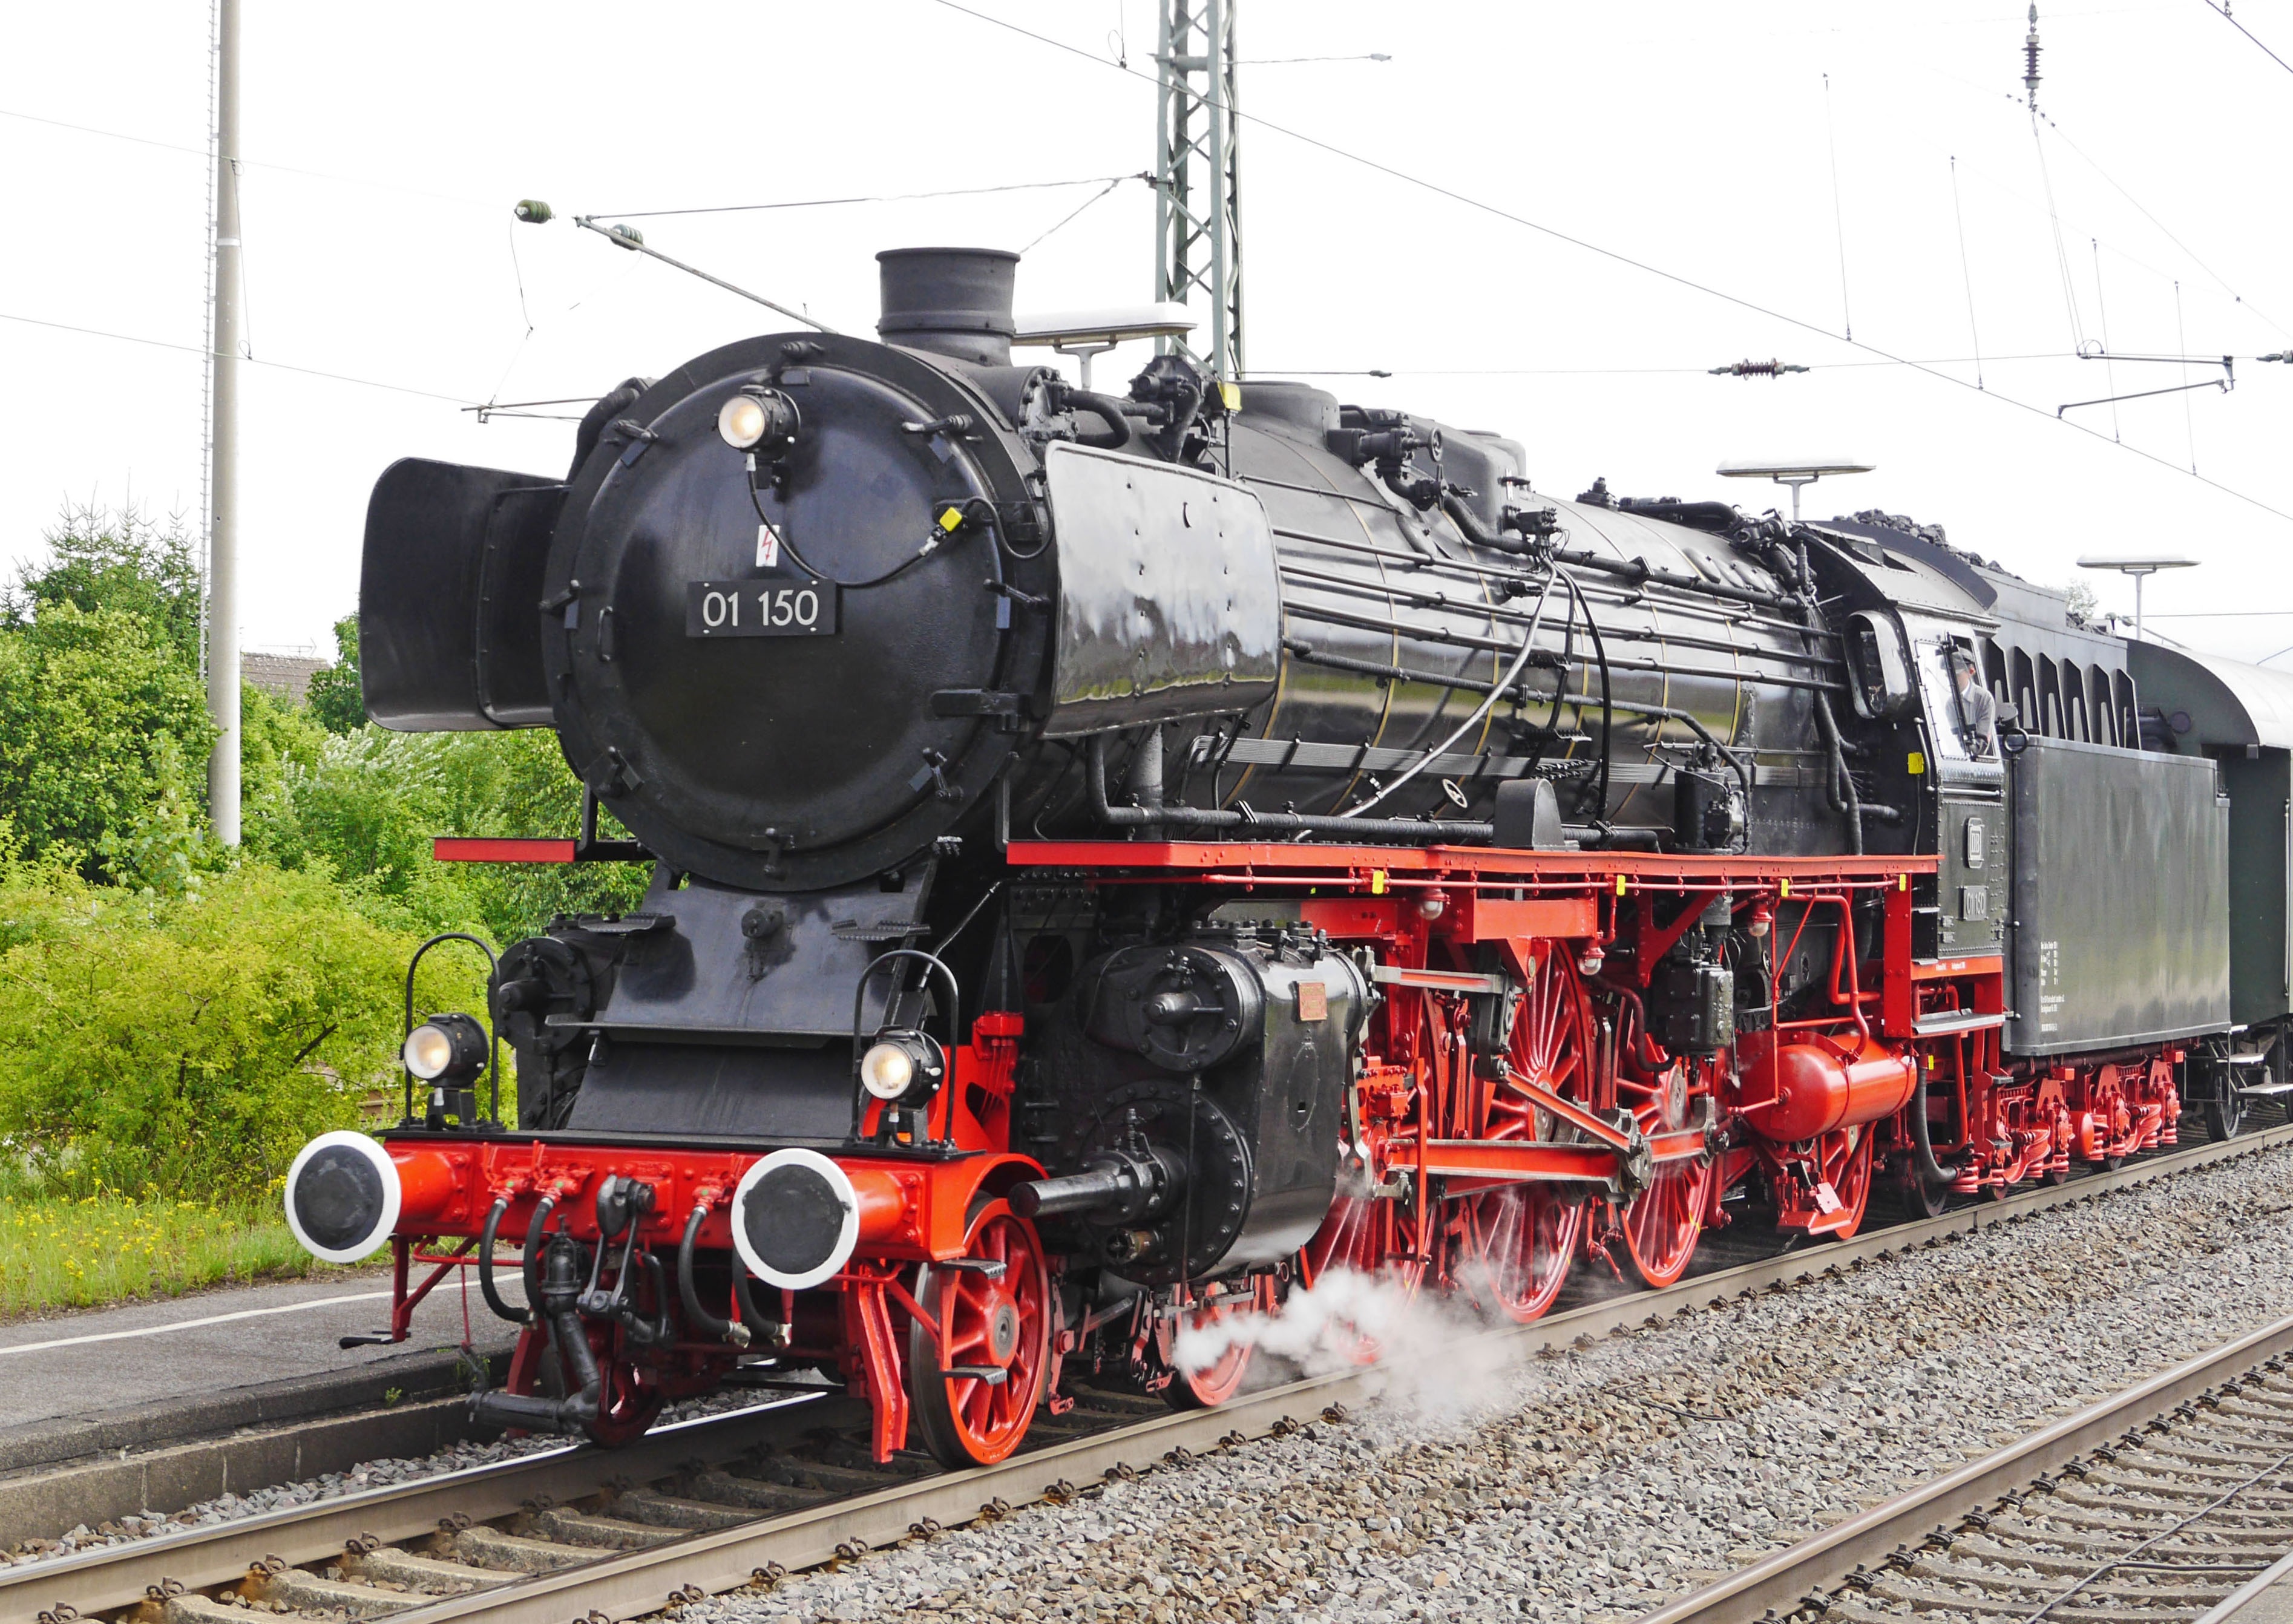 Restored Steam Locomotive BR 01150 by hpgruesen